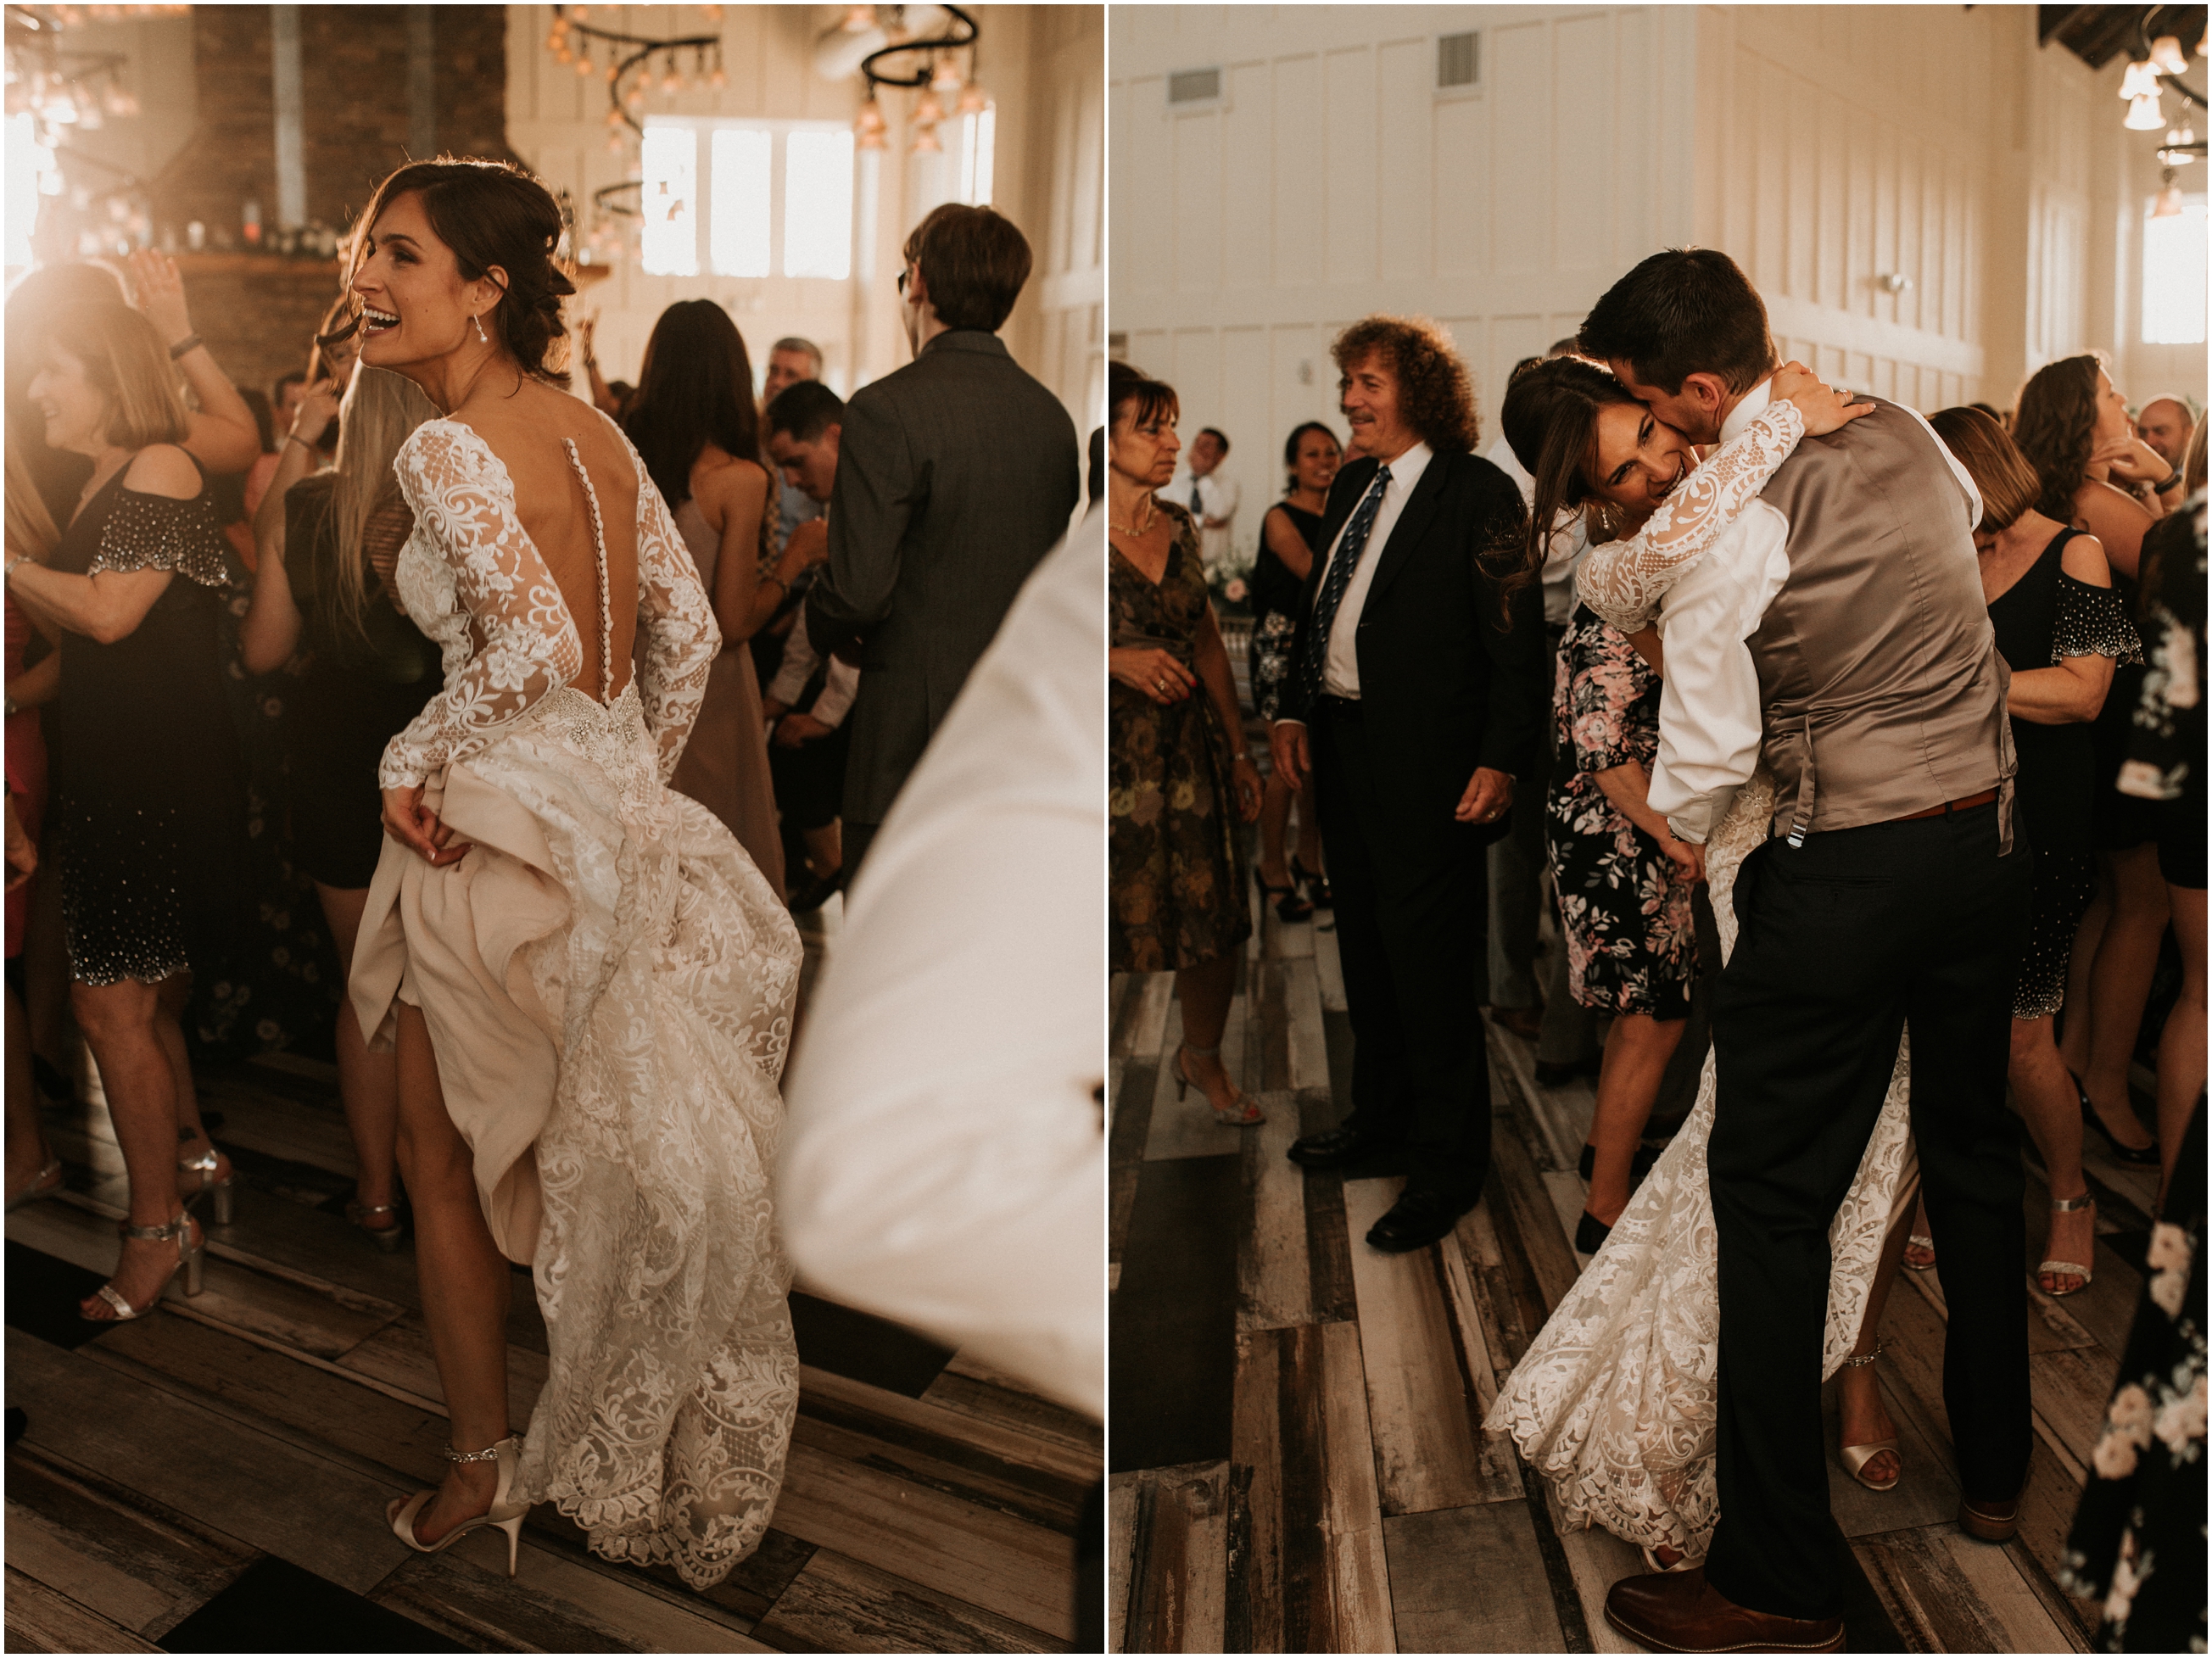 guests dancing at wedding reception